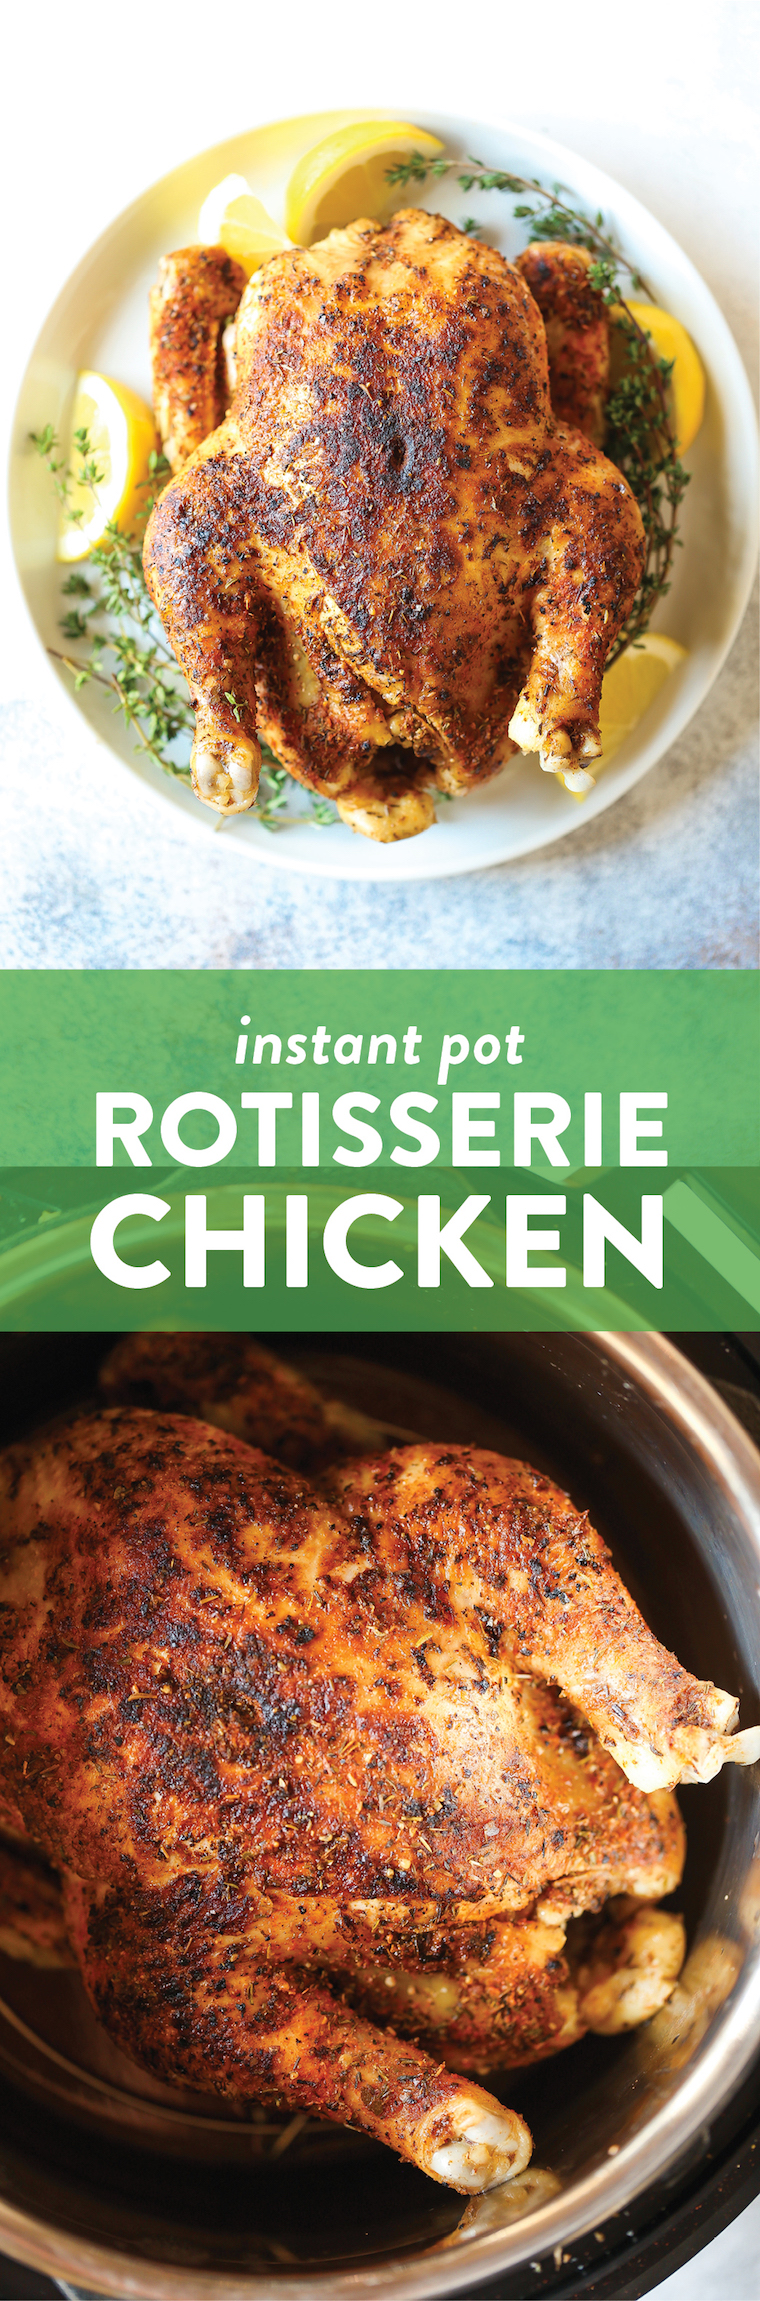 https://s23209.pcdn.co/wp-content/uploads/2019/01/Instant-Pot-Rotisserie-Chicken.jpg